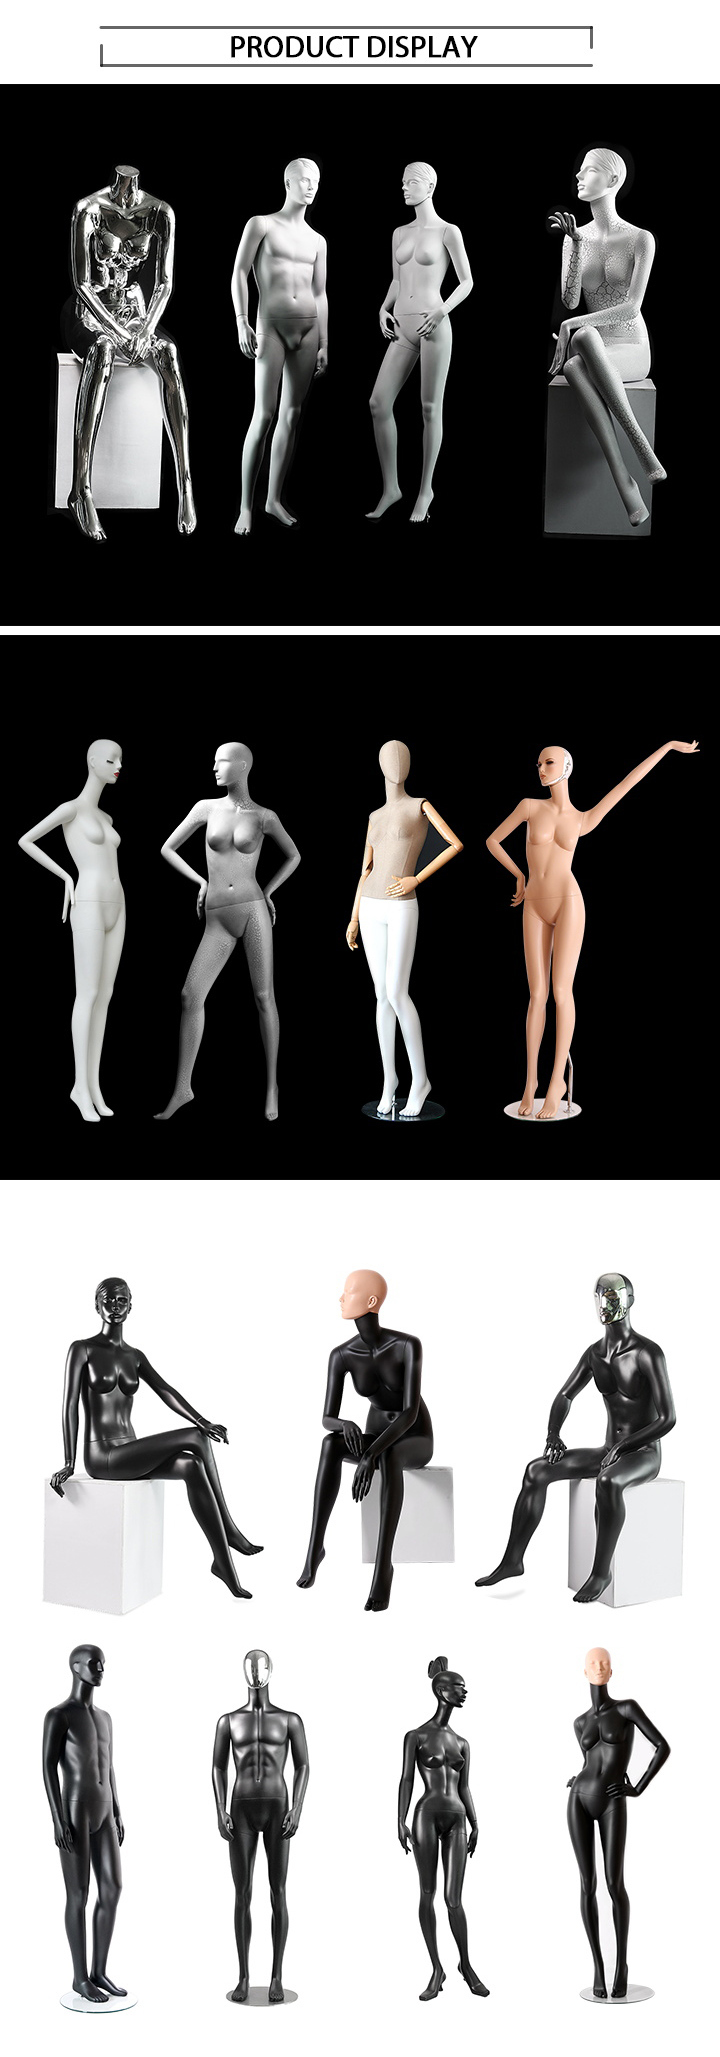 Shopping Mall Window Full Body Female Mannequin Display Models